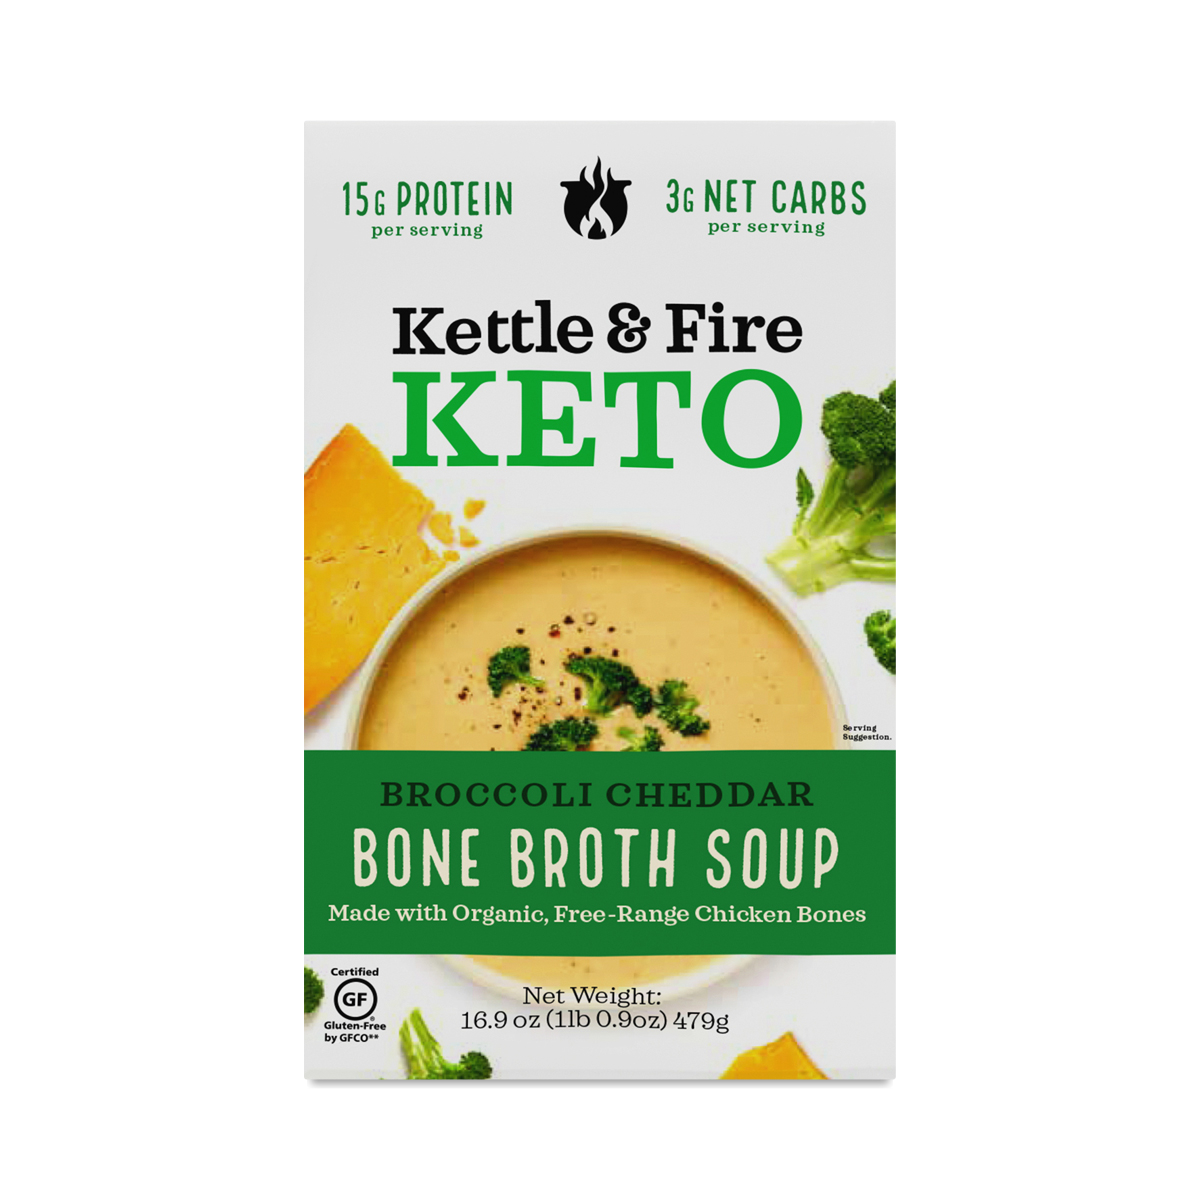 Kettle & Fire Keto Chicken Bone Broth, Broccoli Cheddar Soup 16.9 oz carton